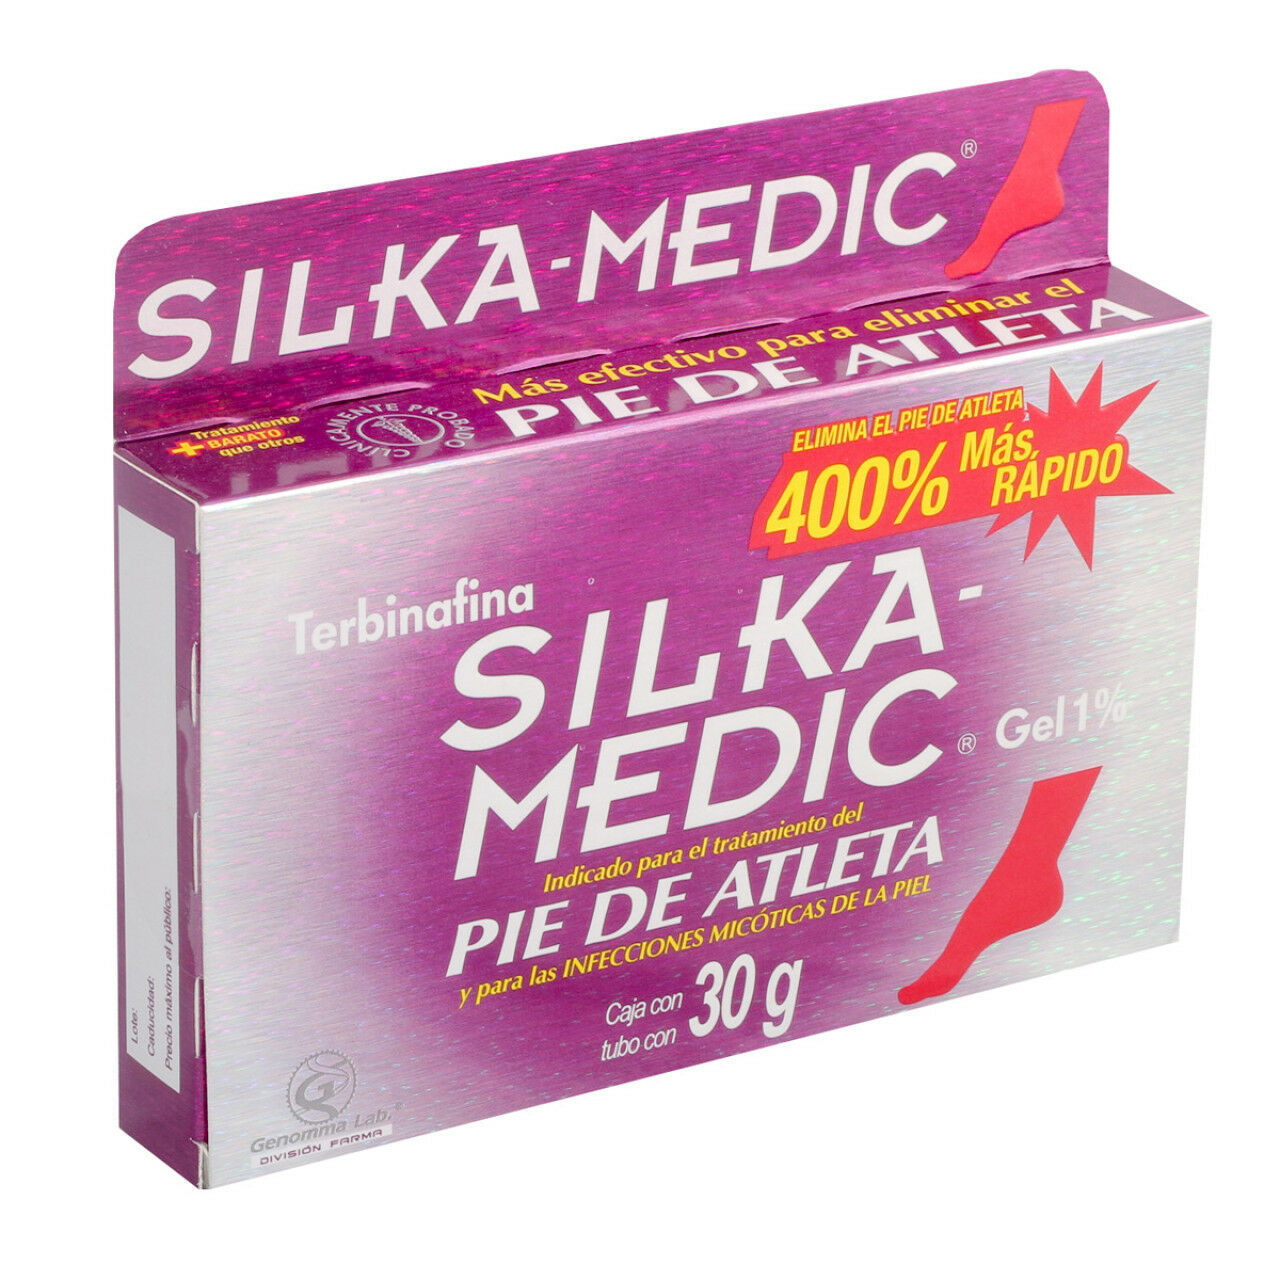 Silka Medic Gel Antifungal Athletes Foot And Fungal Skin Infections Pie De Atleta Nail Art